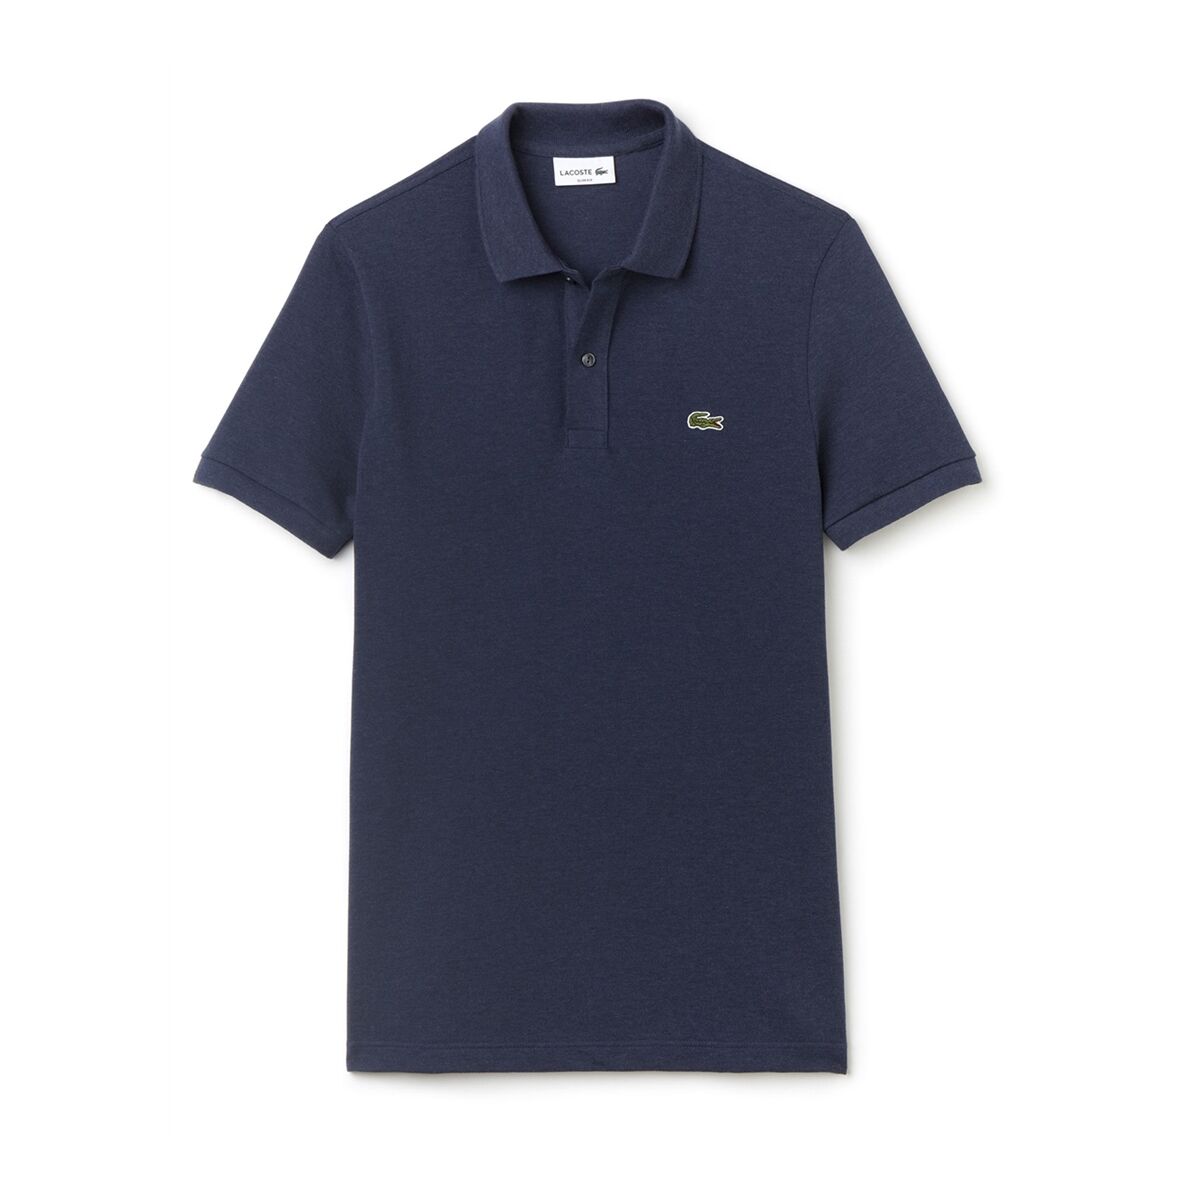 Lacoste Men's Slim Fit Polo Navy Blue S